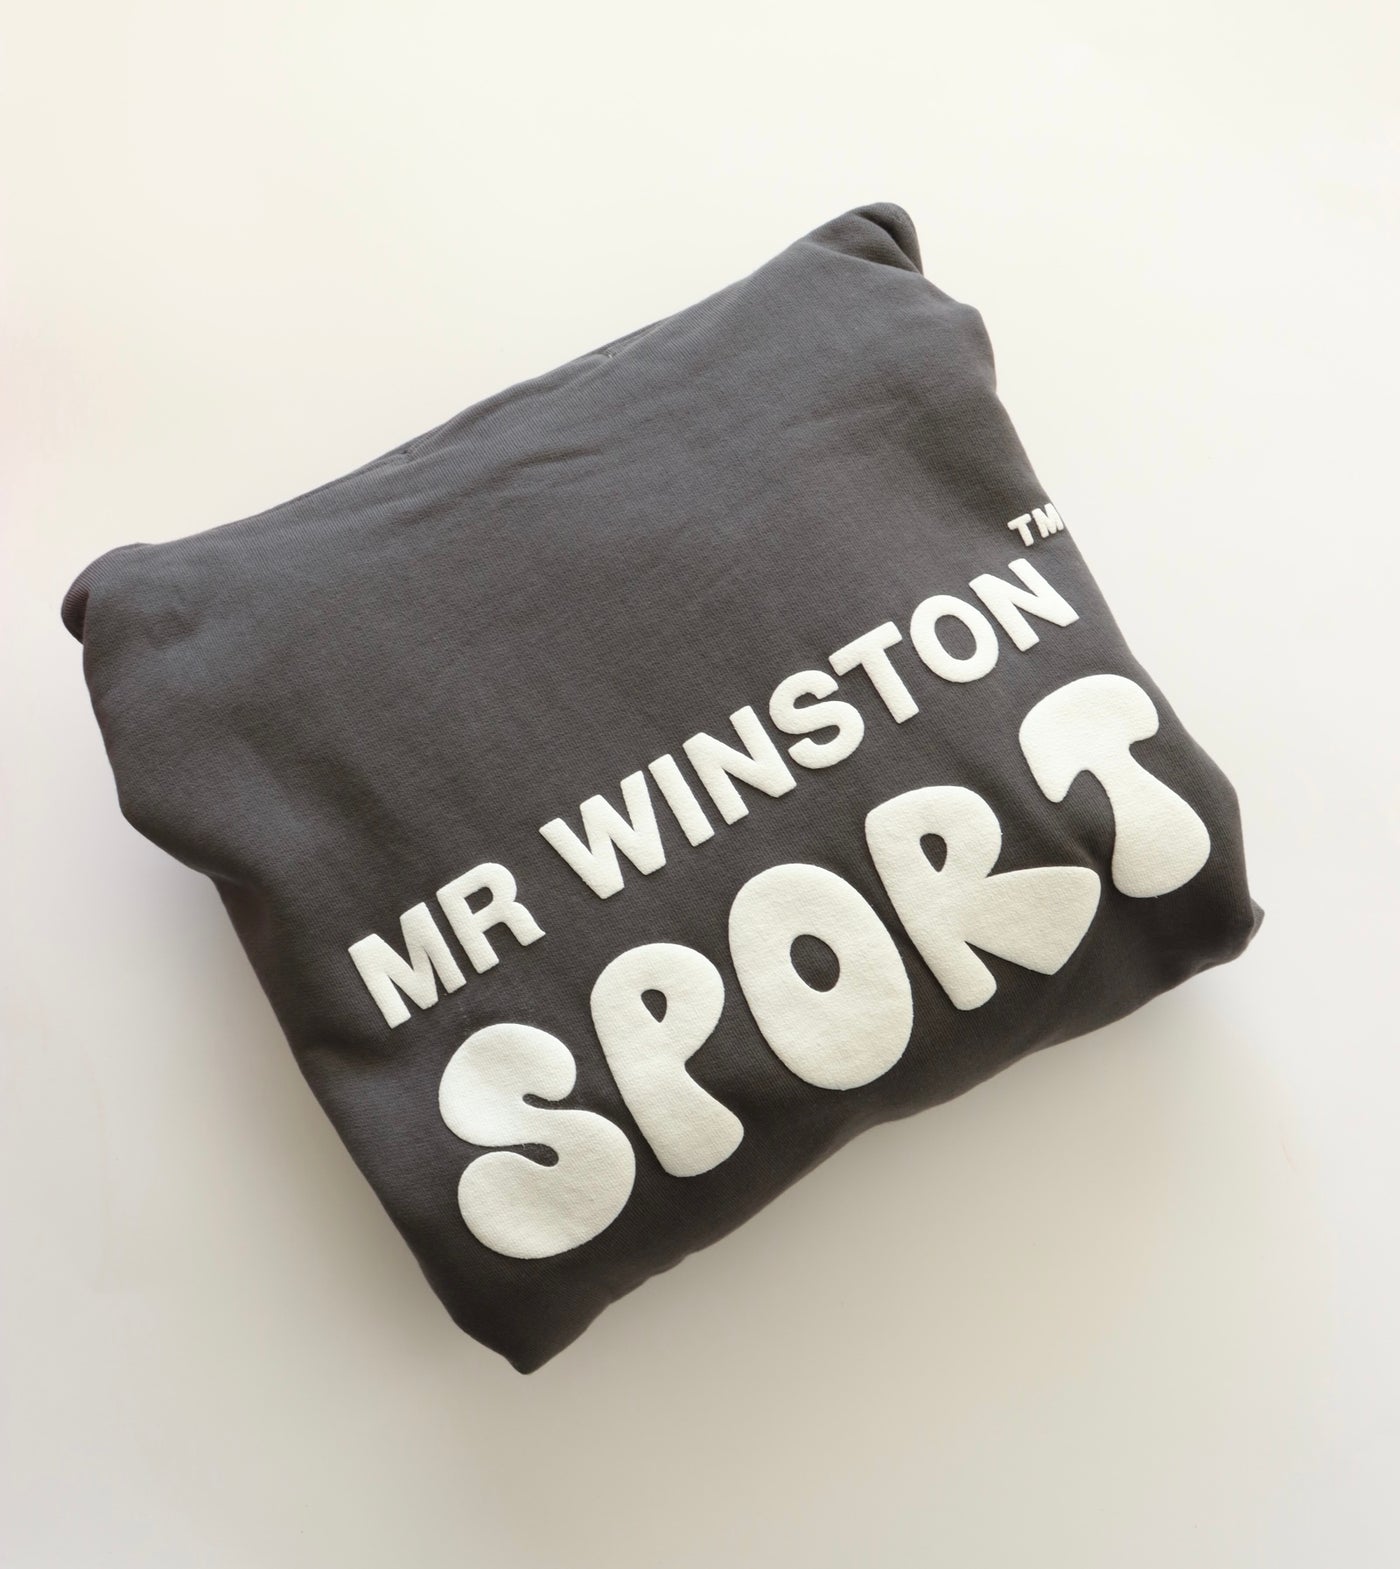 Mr Winston